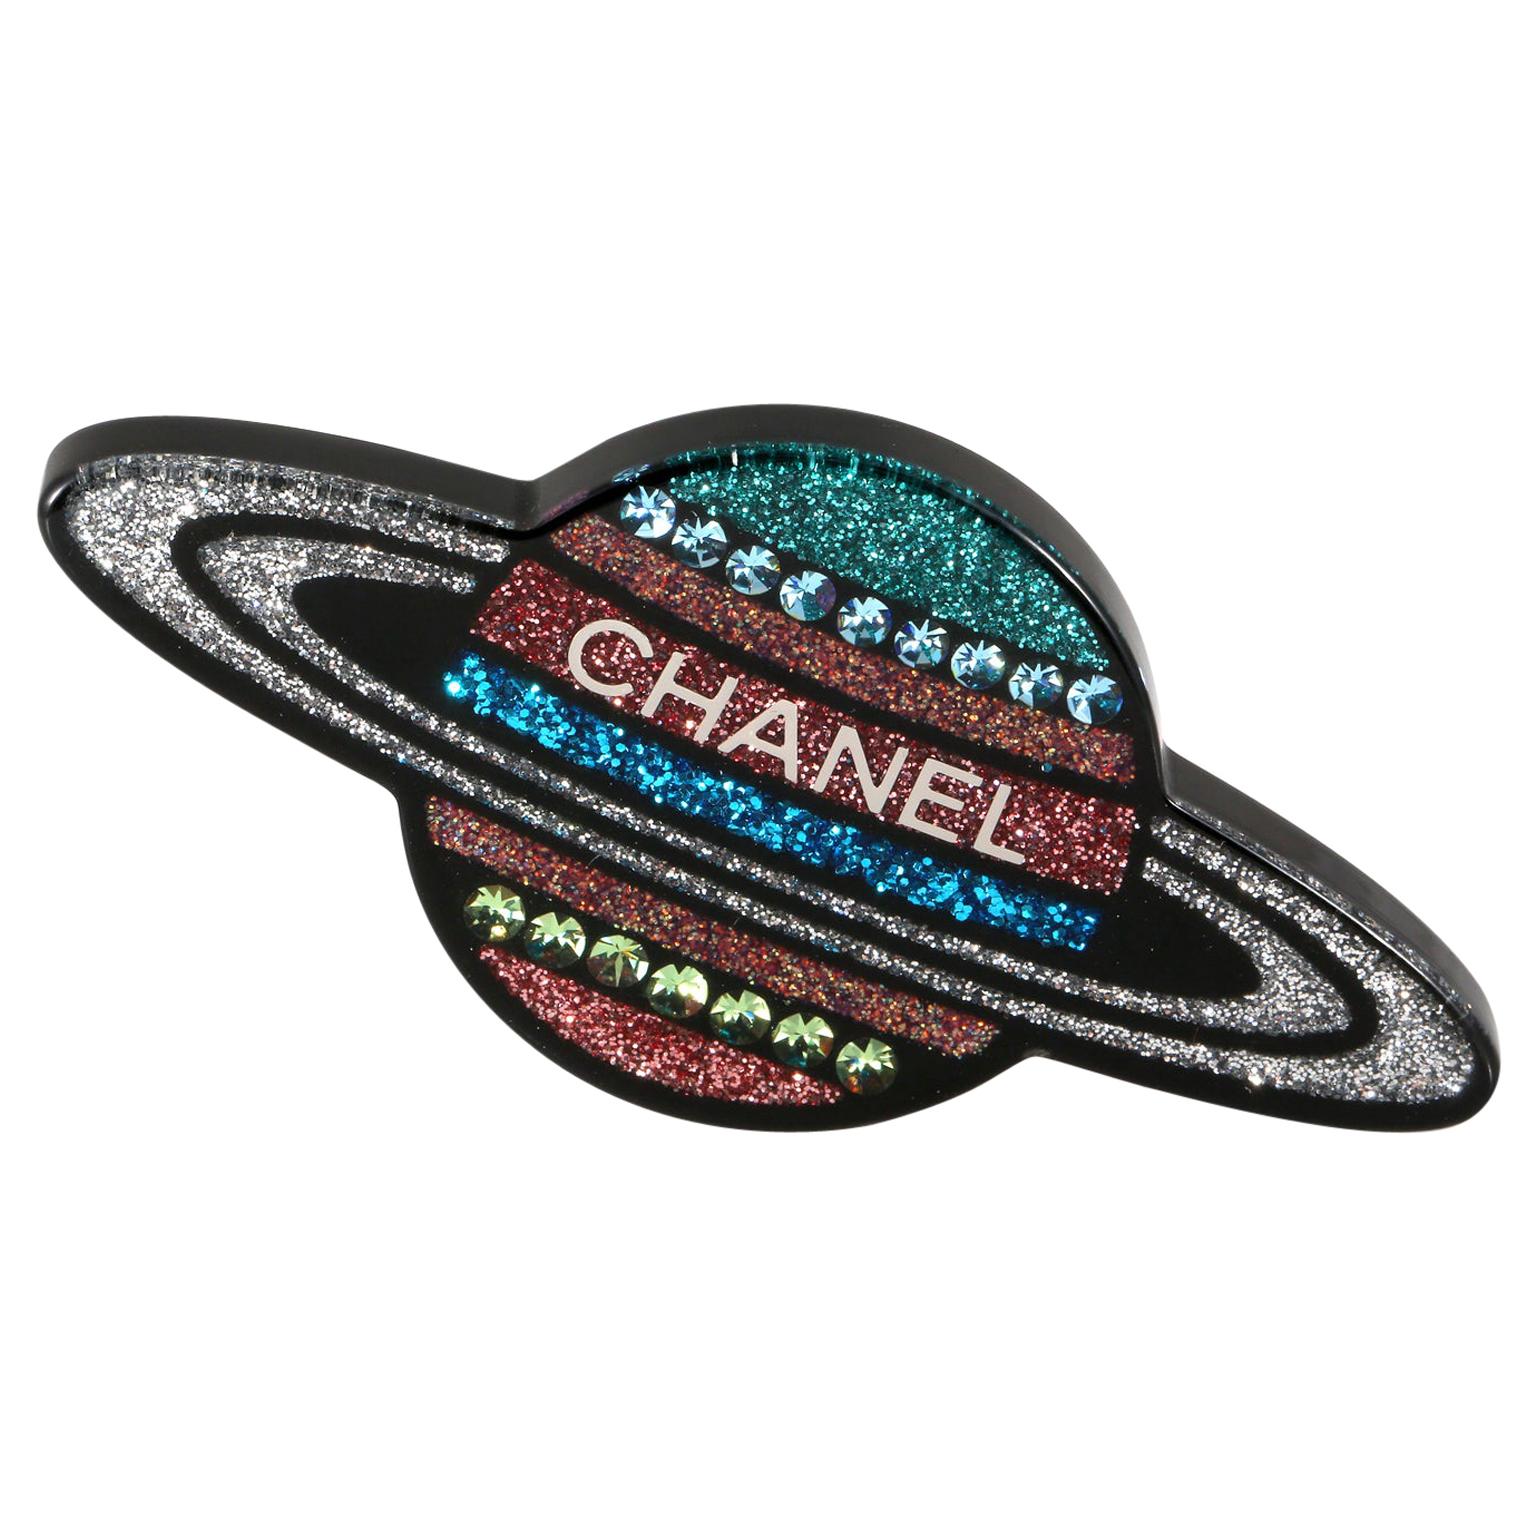 Chanel Glitter Saturn Pin